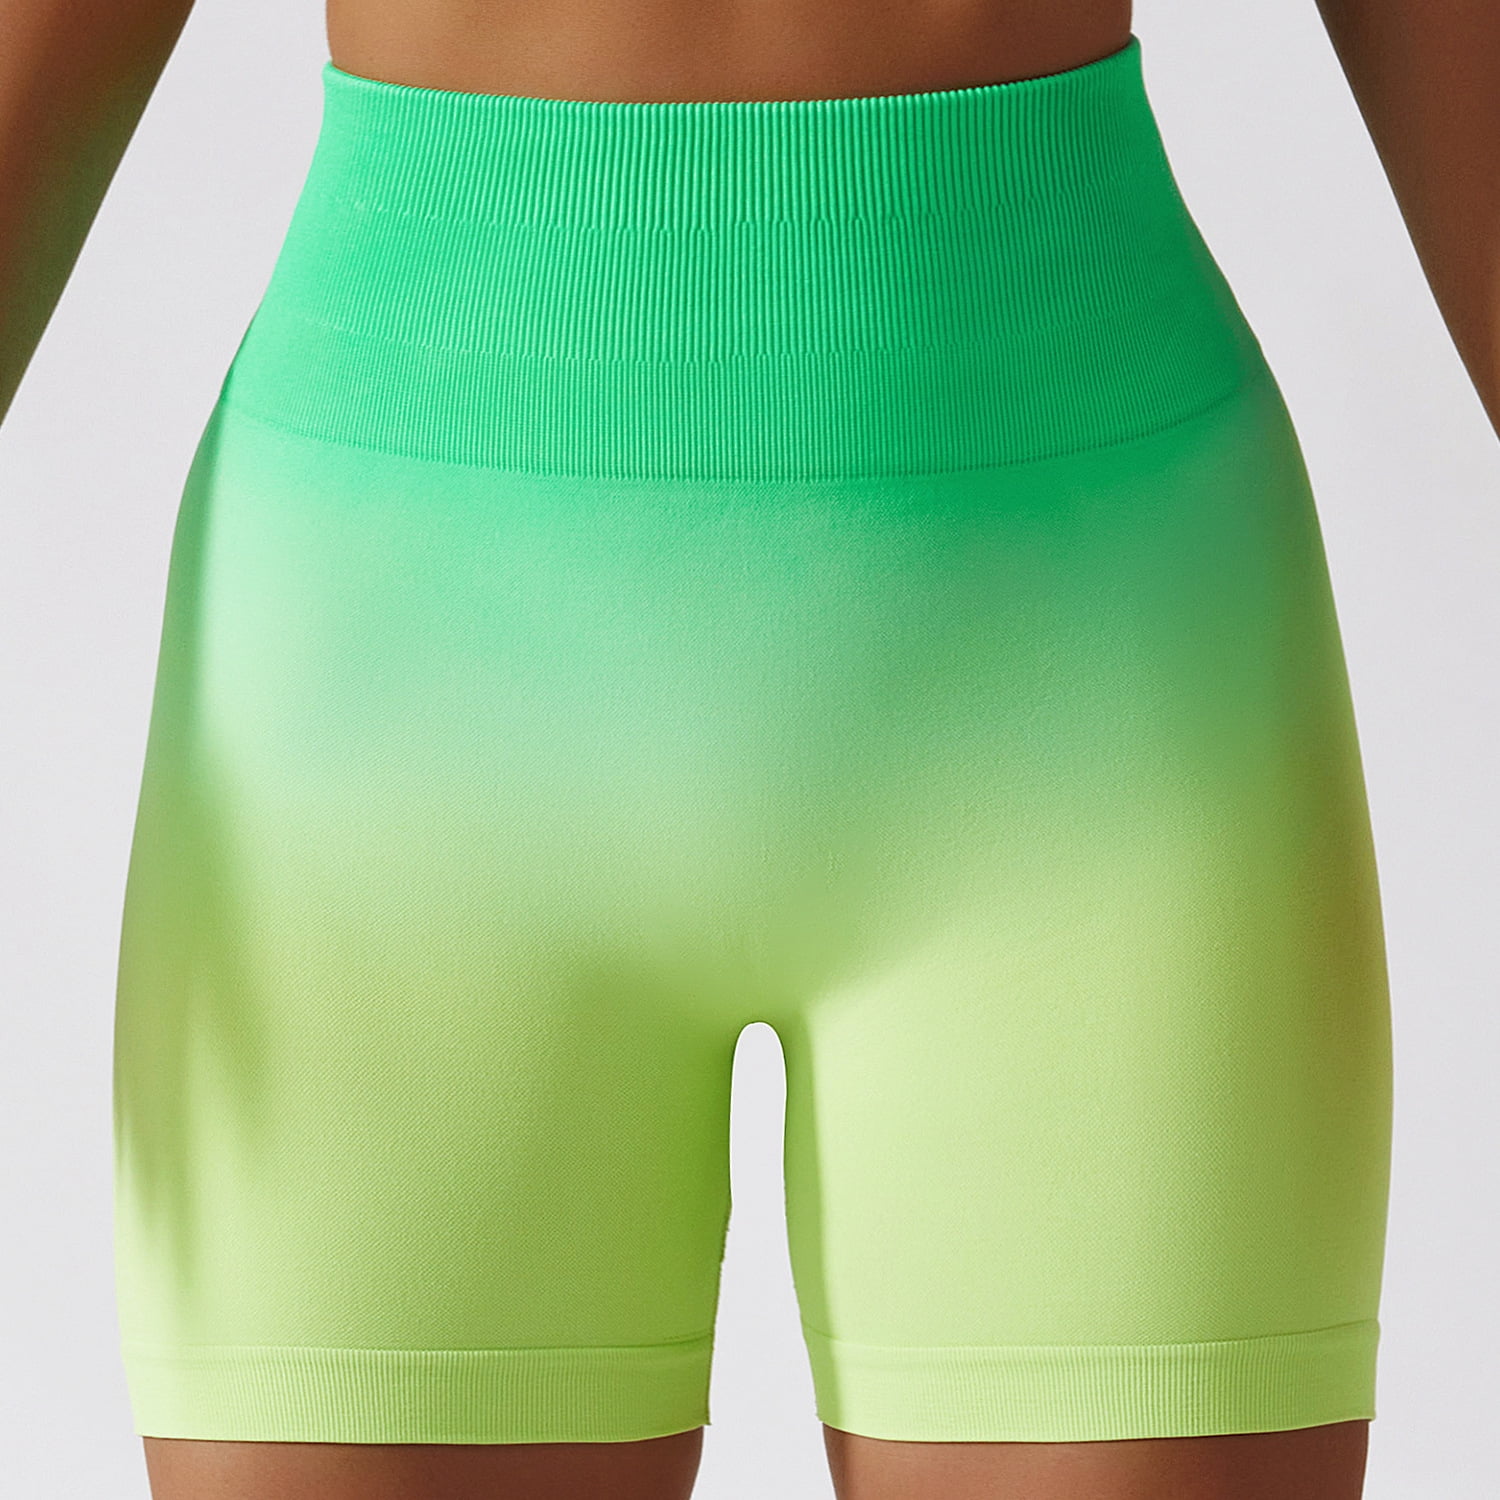 BESTSPR Women's High Waist Yoga Shorts Compression Workout Running Shorts  Size S-L 